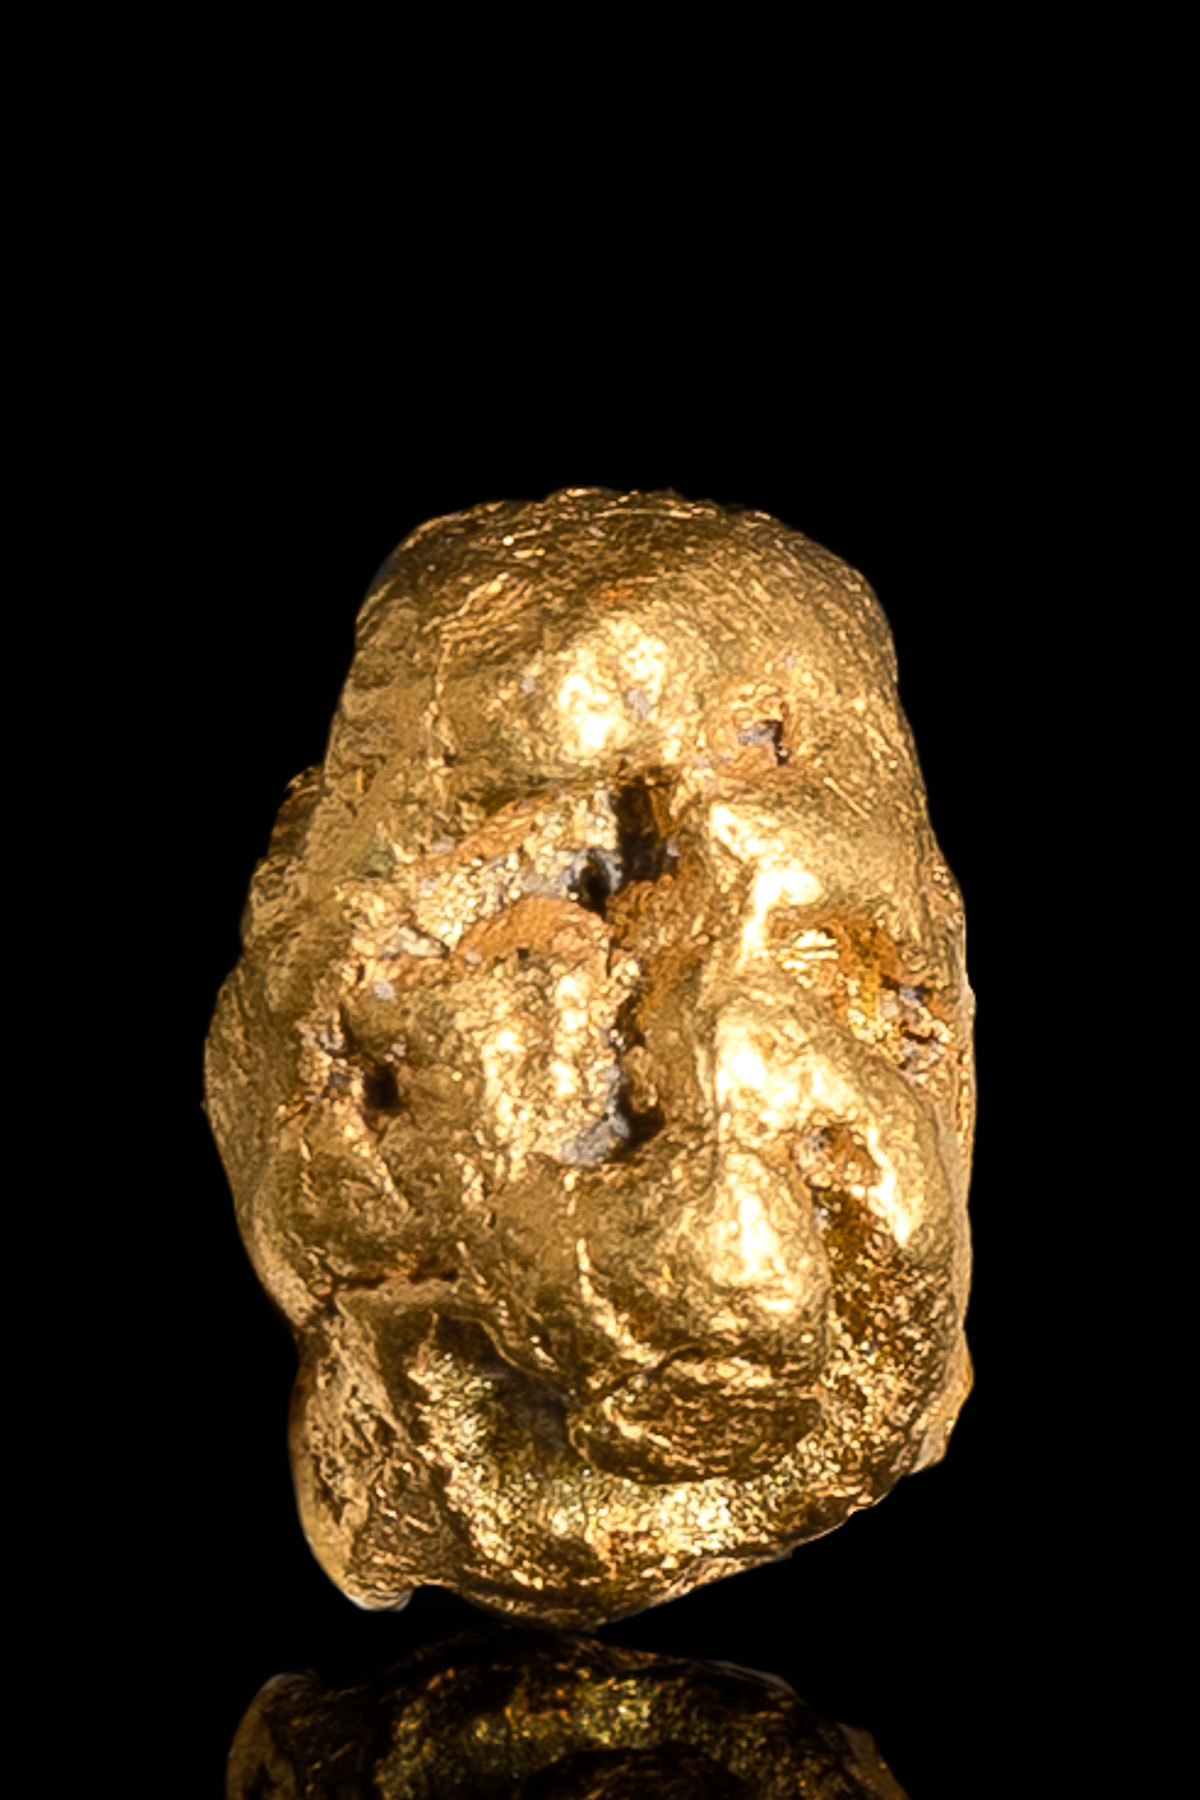 Round Pocketed Yukon Natural Gold Nugget - 2.73 grams